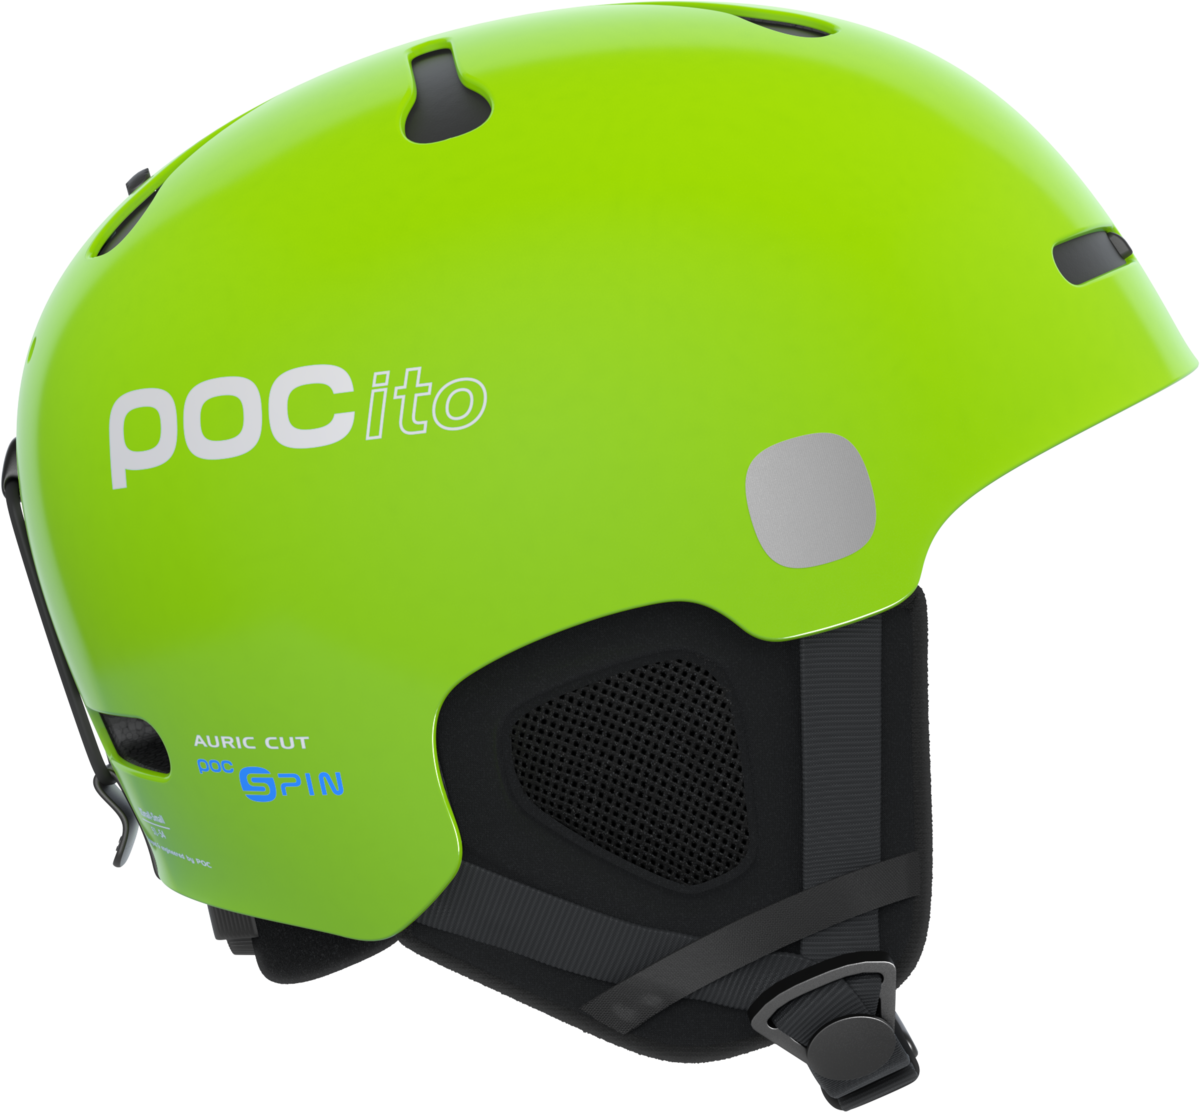 POC Sports Unisex-Youth Pocito Auric Cut Spin Snowsports Helmet